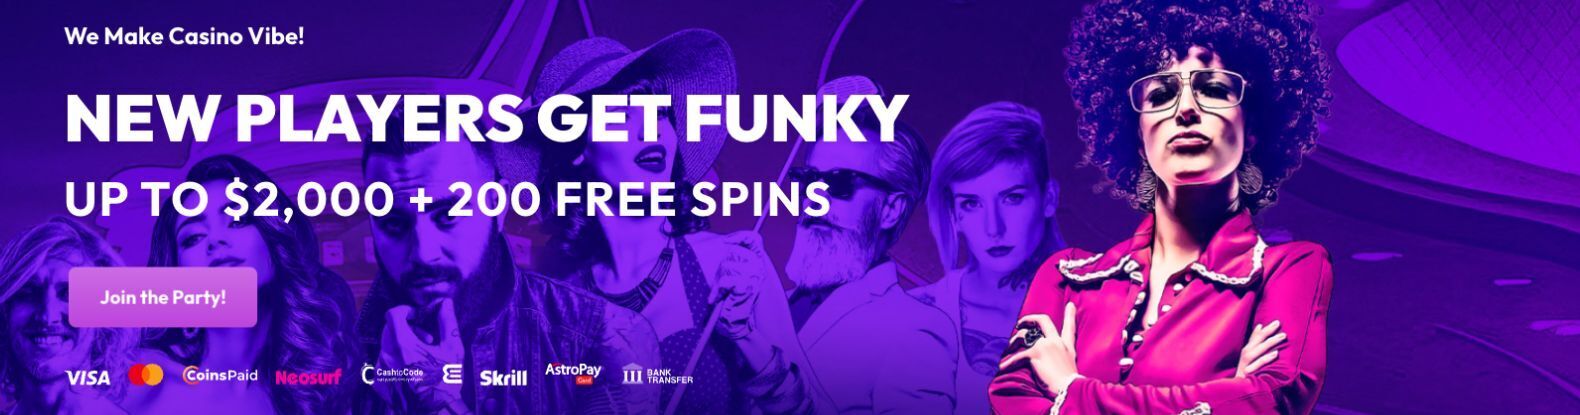 SpinFever Welcome Bonus Gamble Online Australia Casino Review